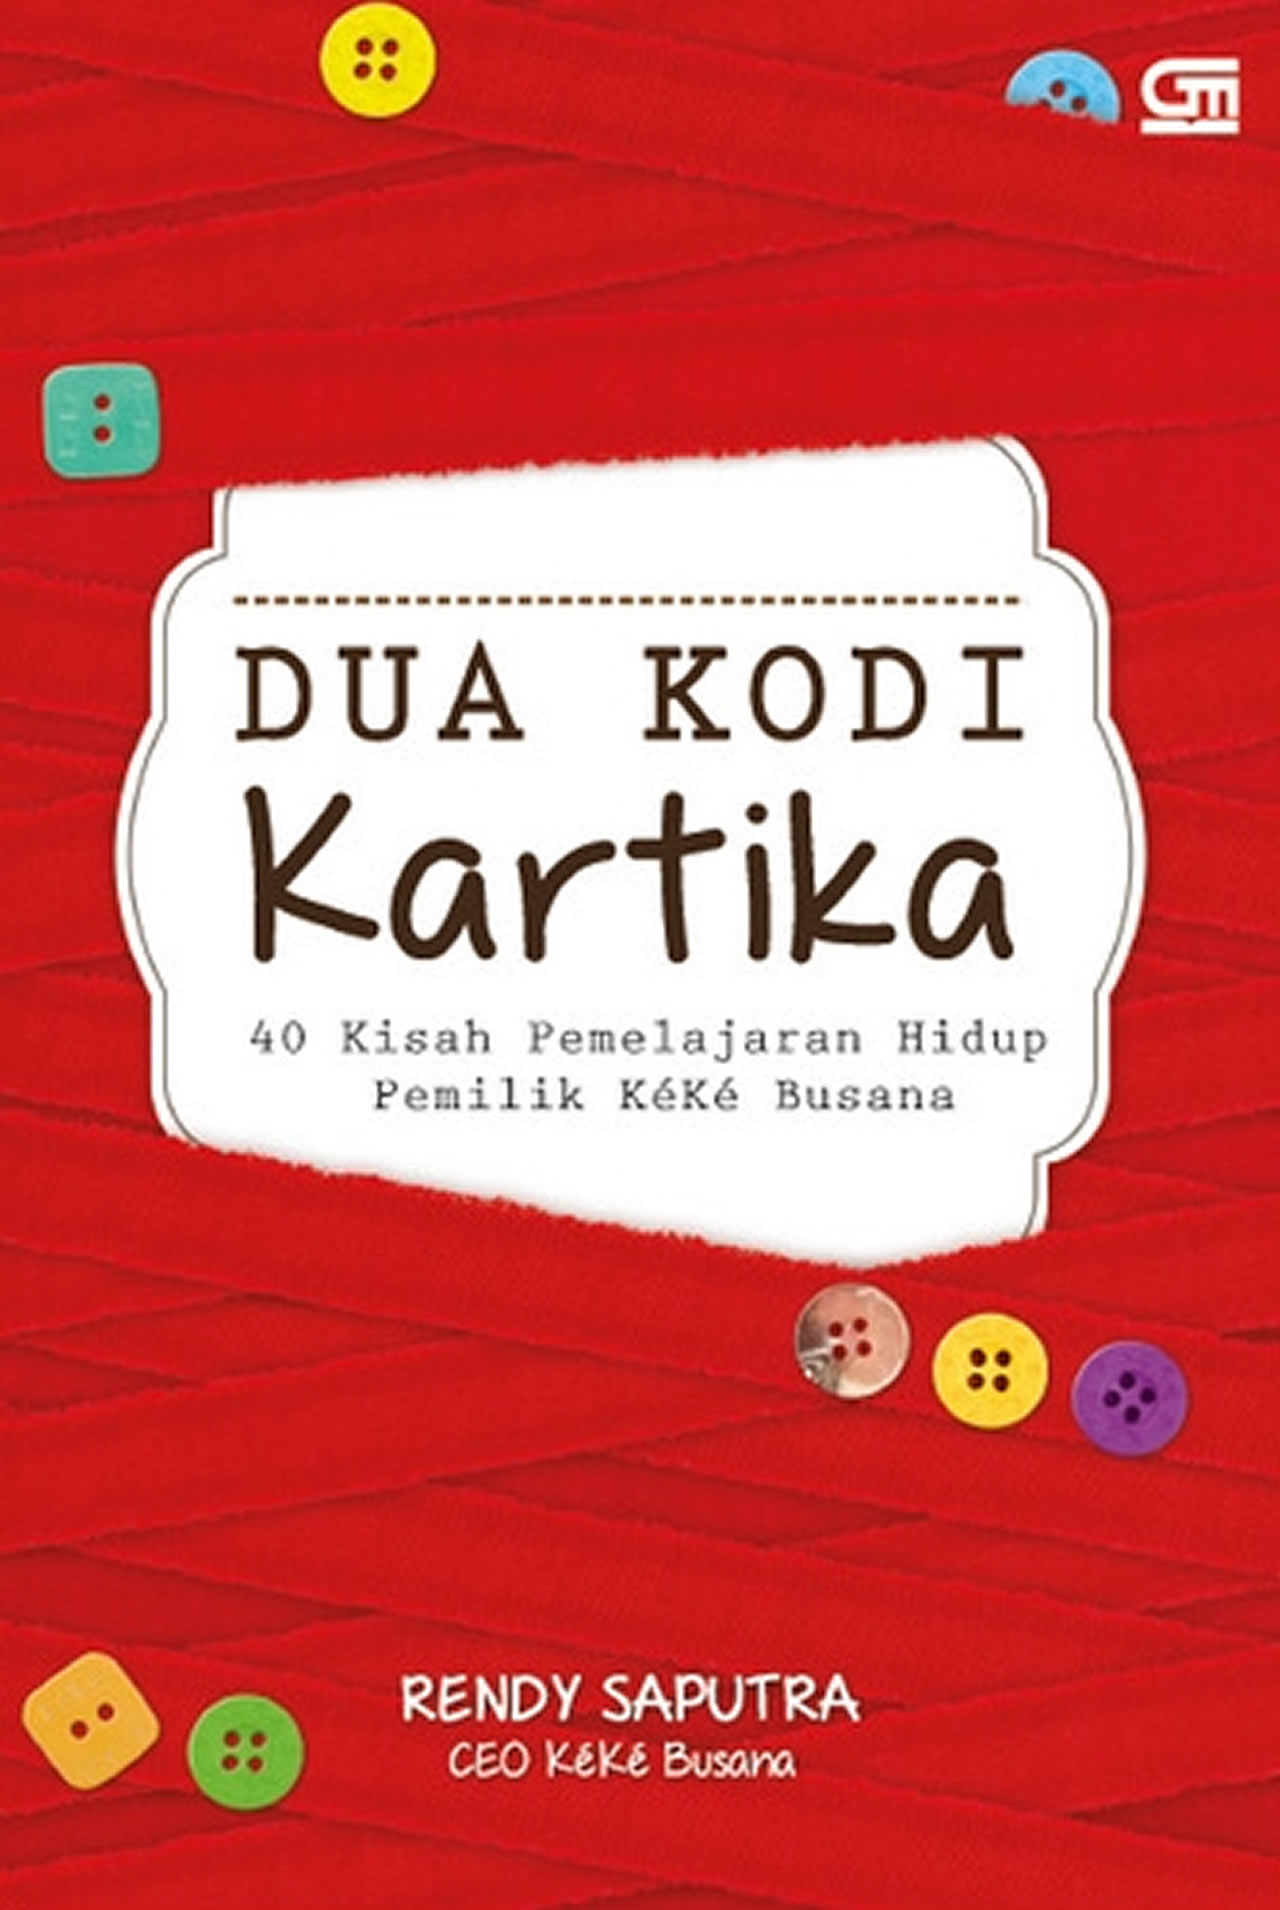 Cover buku "Dua Kodi Kartika"